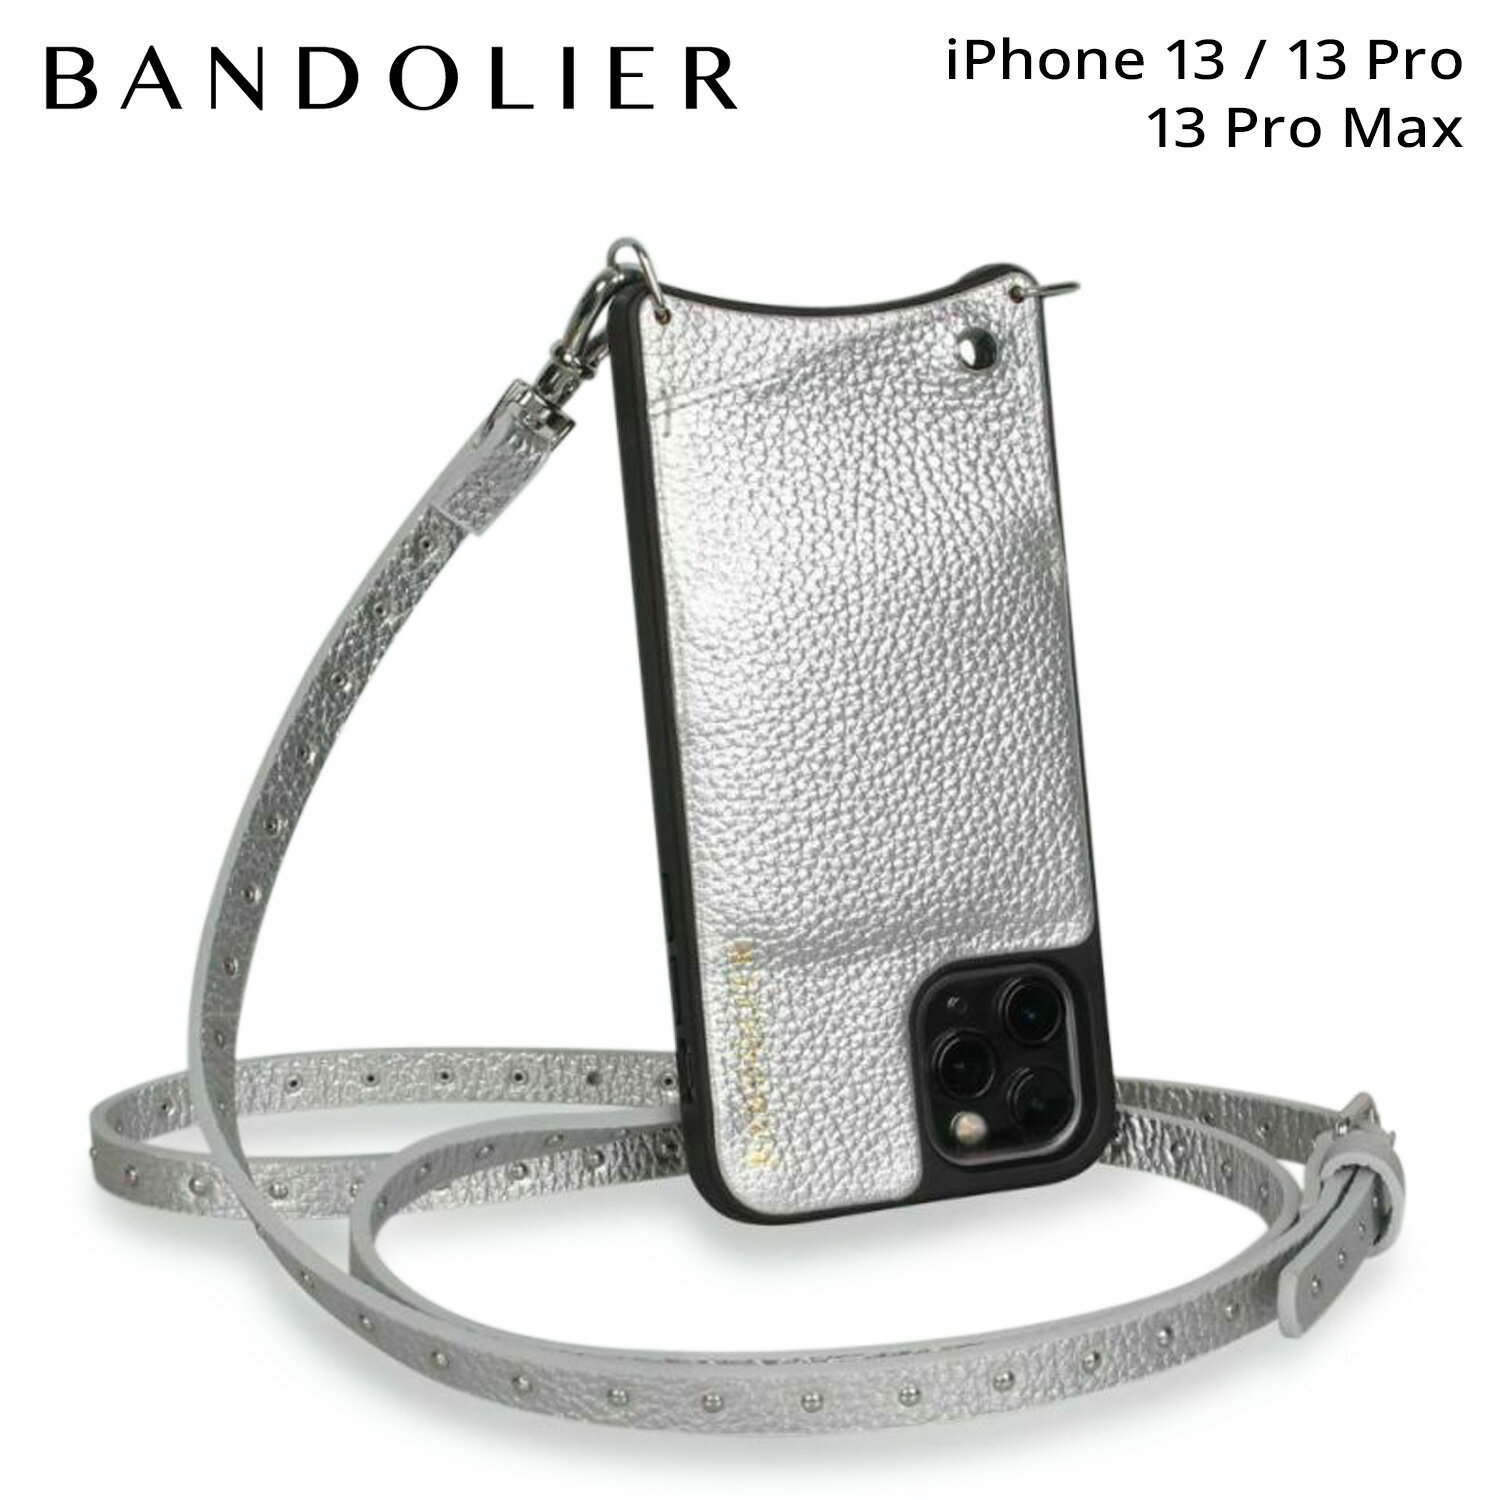 BANDOLIER バンドリヤー iPhone 13 13Pro iPhone 13 Pro Max スマホケース スマホショルダー 携帯 アイフォン ニコル リッチ シルバー メンズ レディース NICOLE RICH SILVER シルバー 10NCL